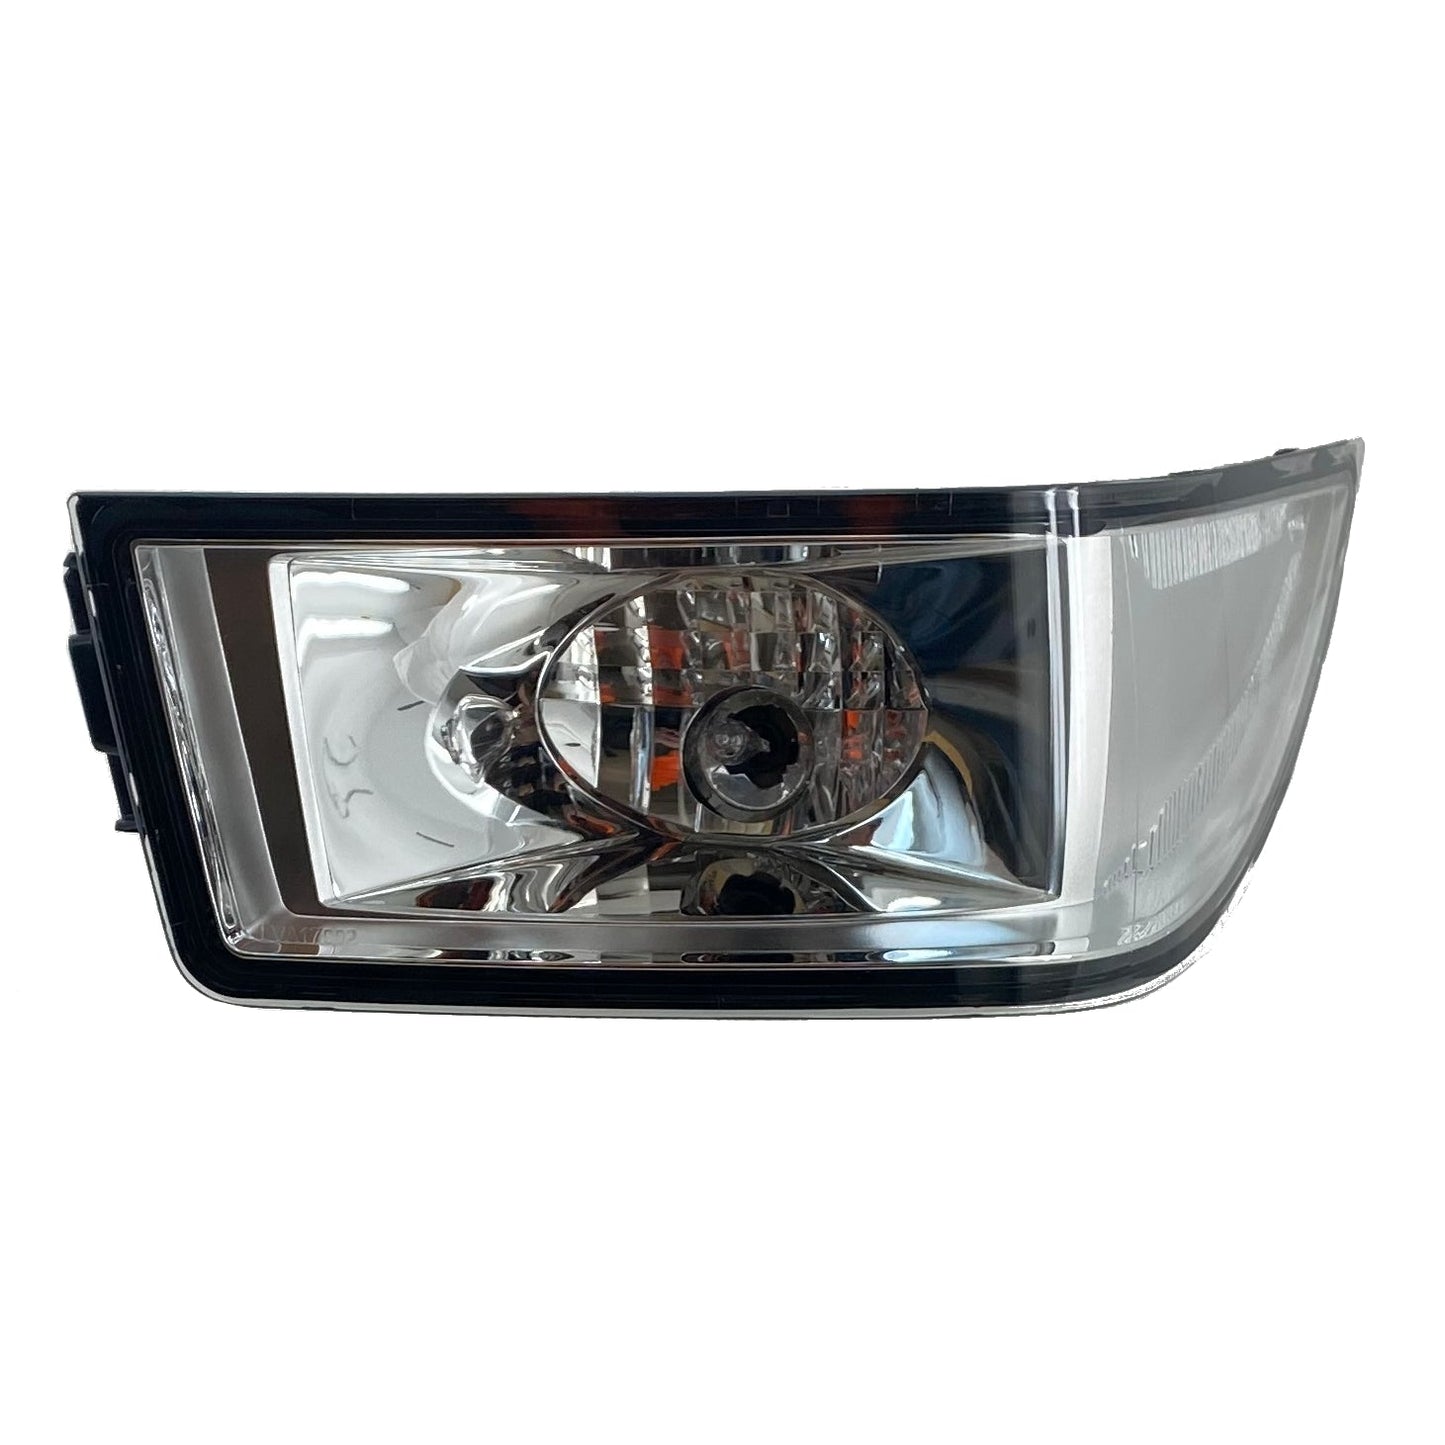 John Deere Original Equipment Headlight - LVA17902